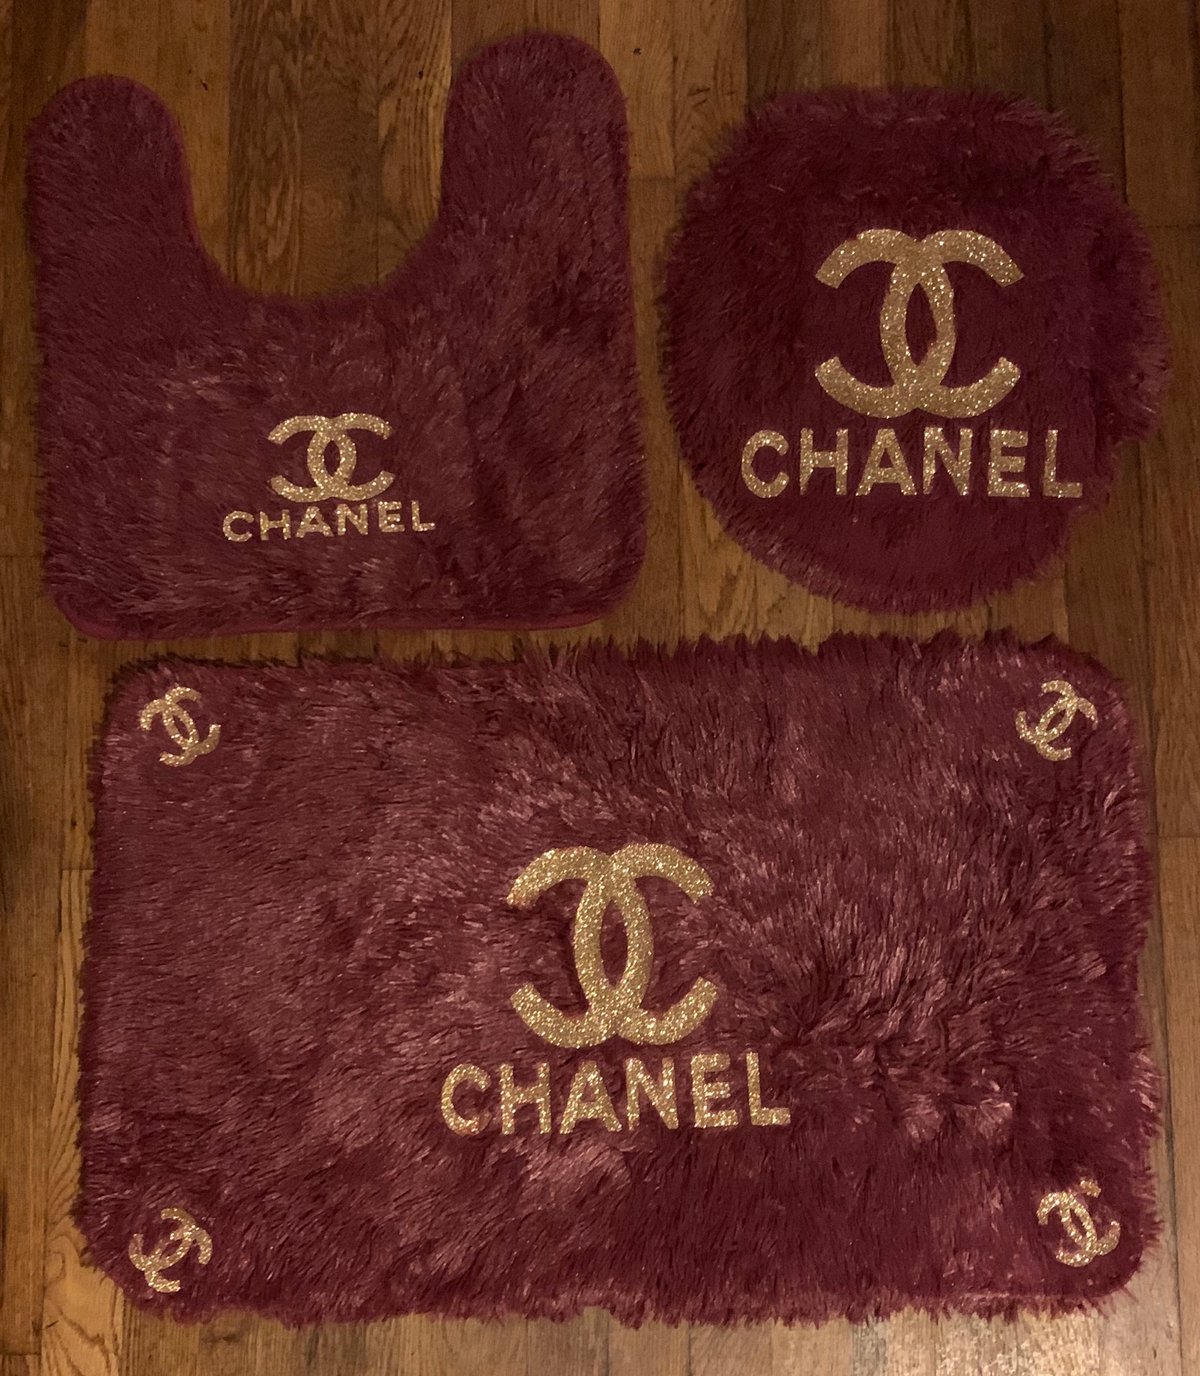 Chanel Bathroom Set 